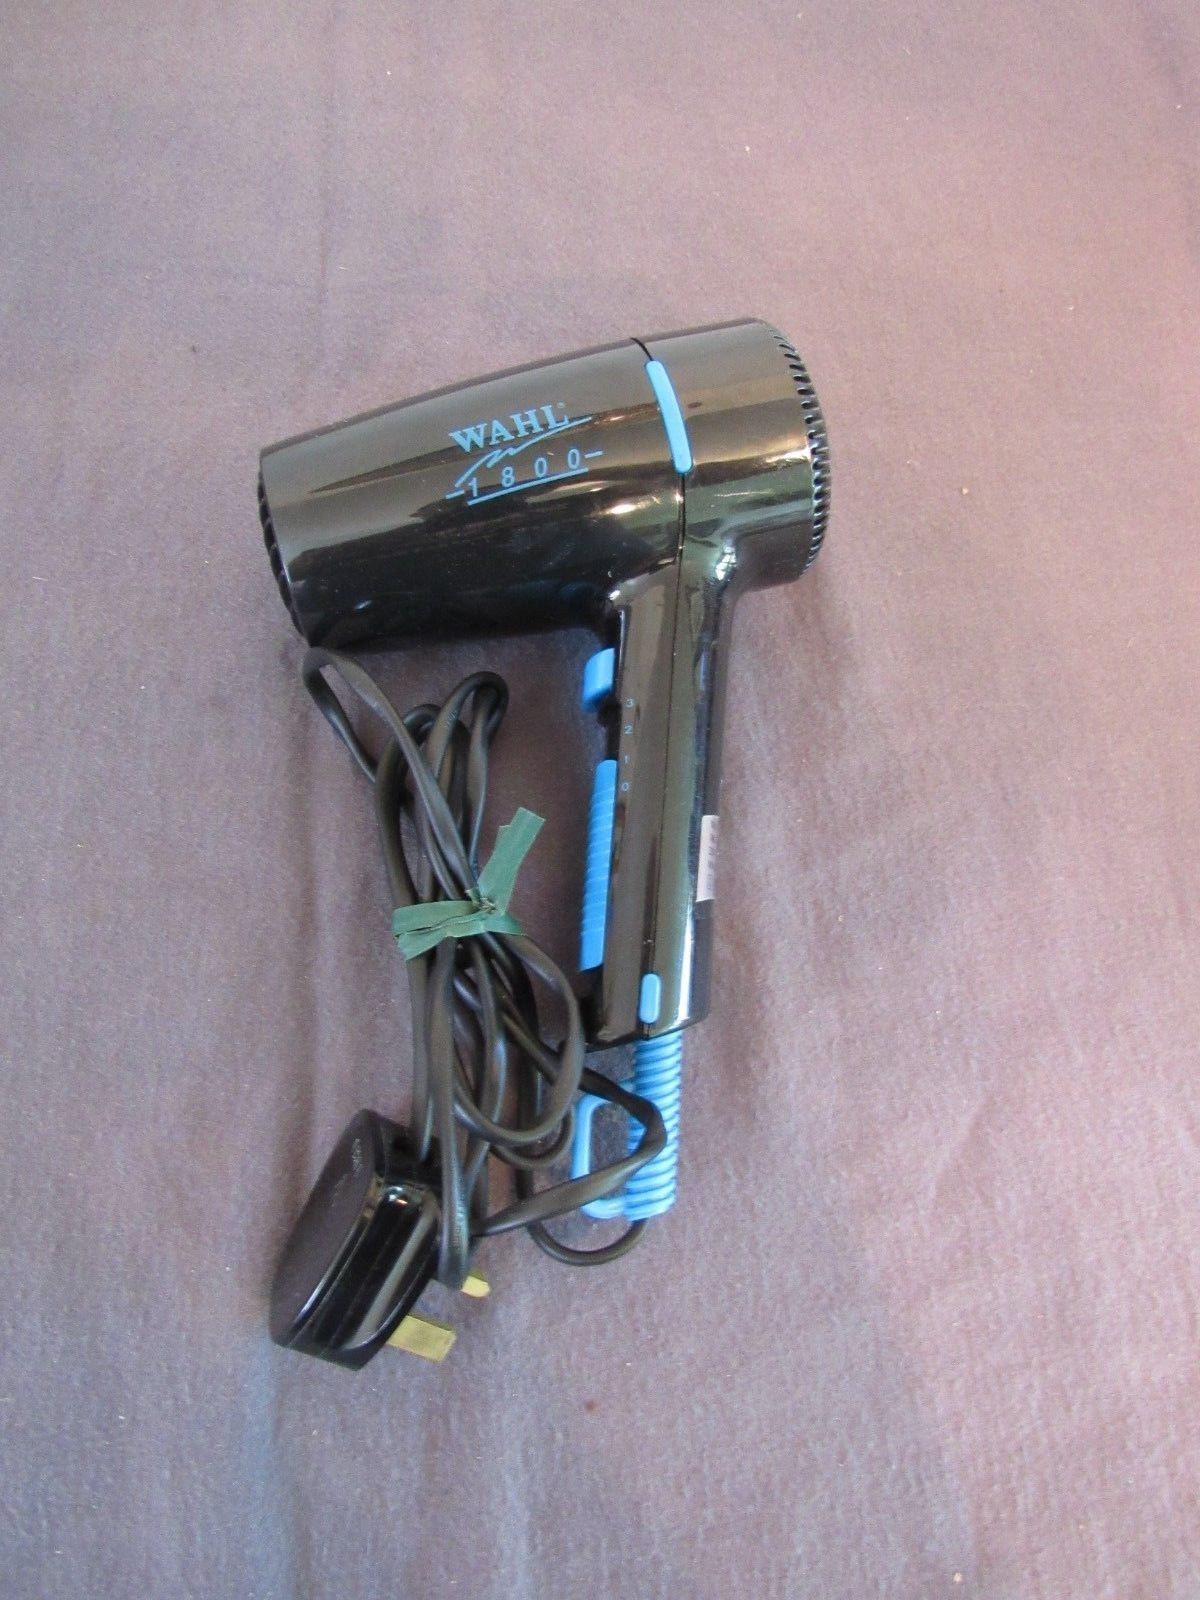 Wahl 1800 International Hair Dryer ZX151-1 - $19.89